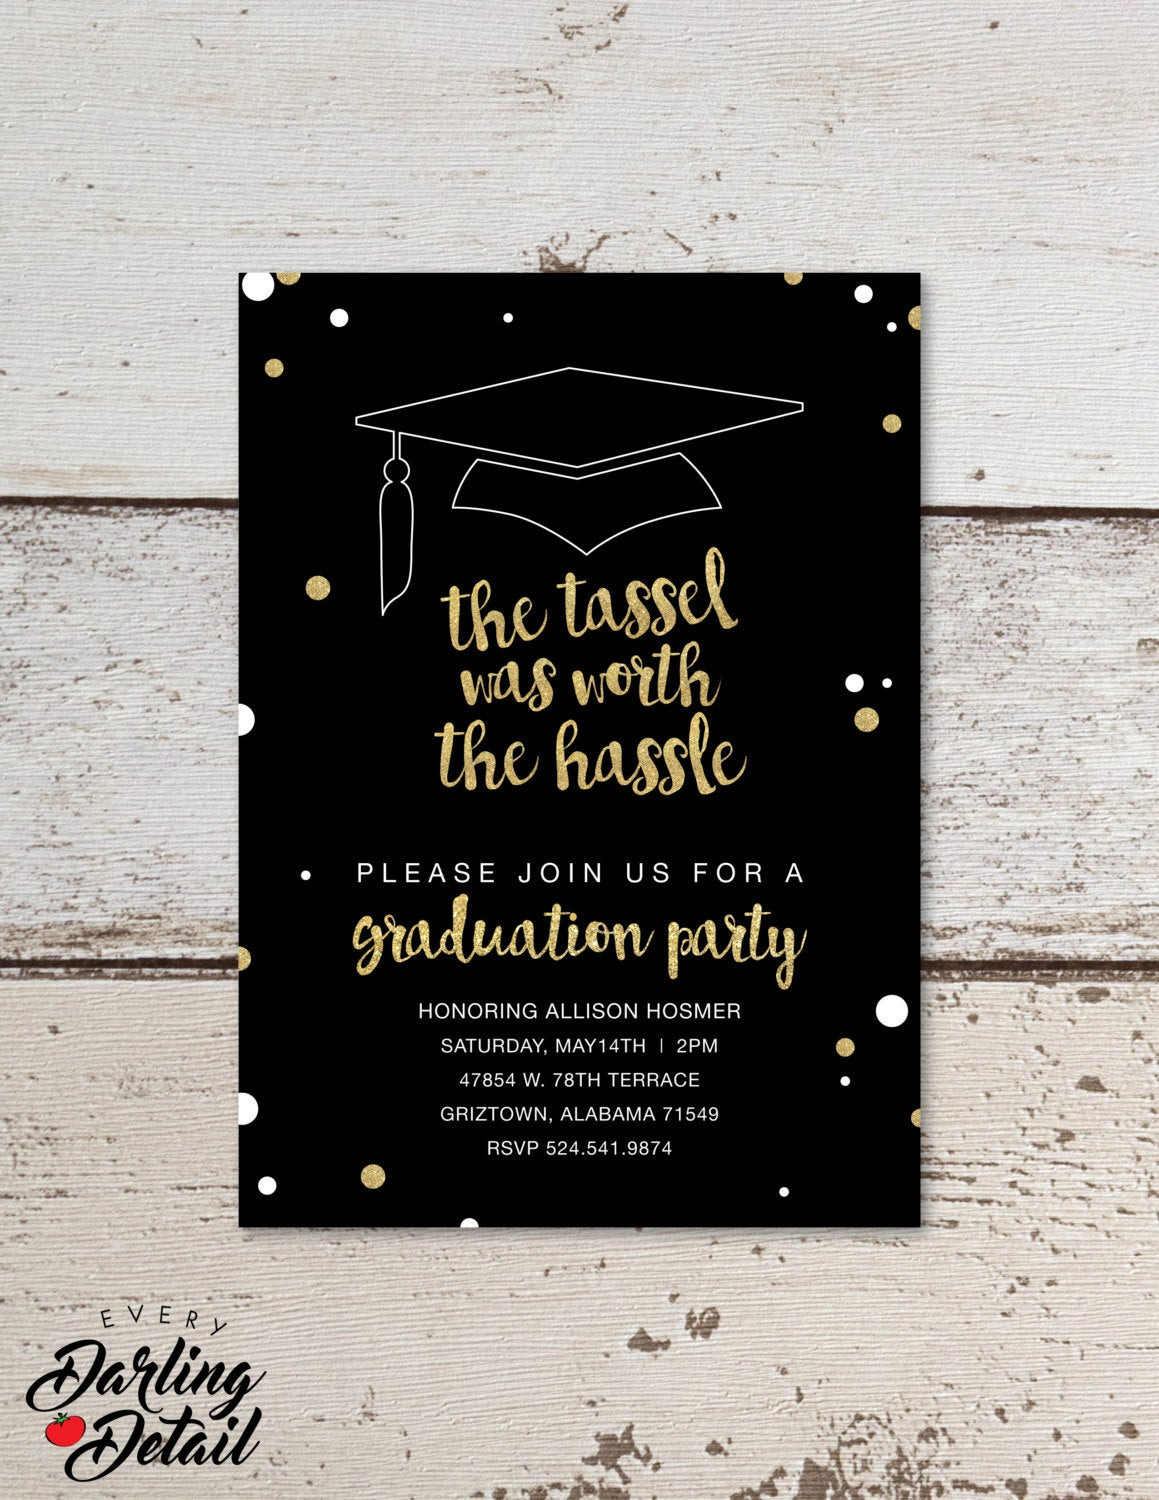 Graduation Party Invitations Ideas
 The Tassel was Worth the Hassle Graduation Party Invitation